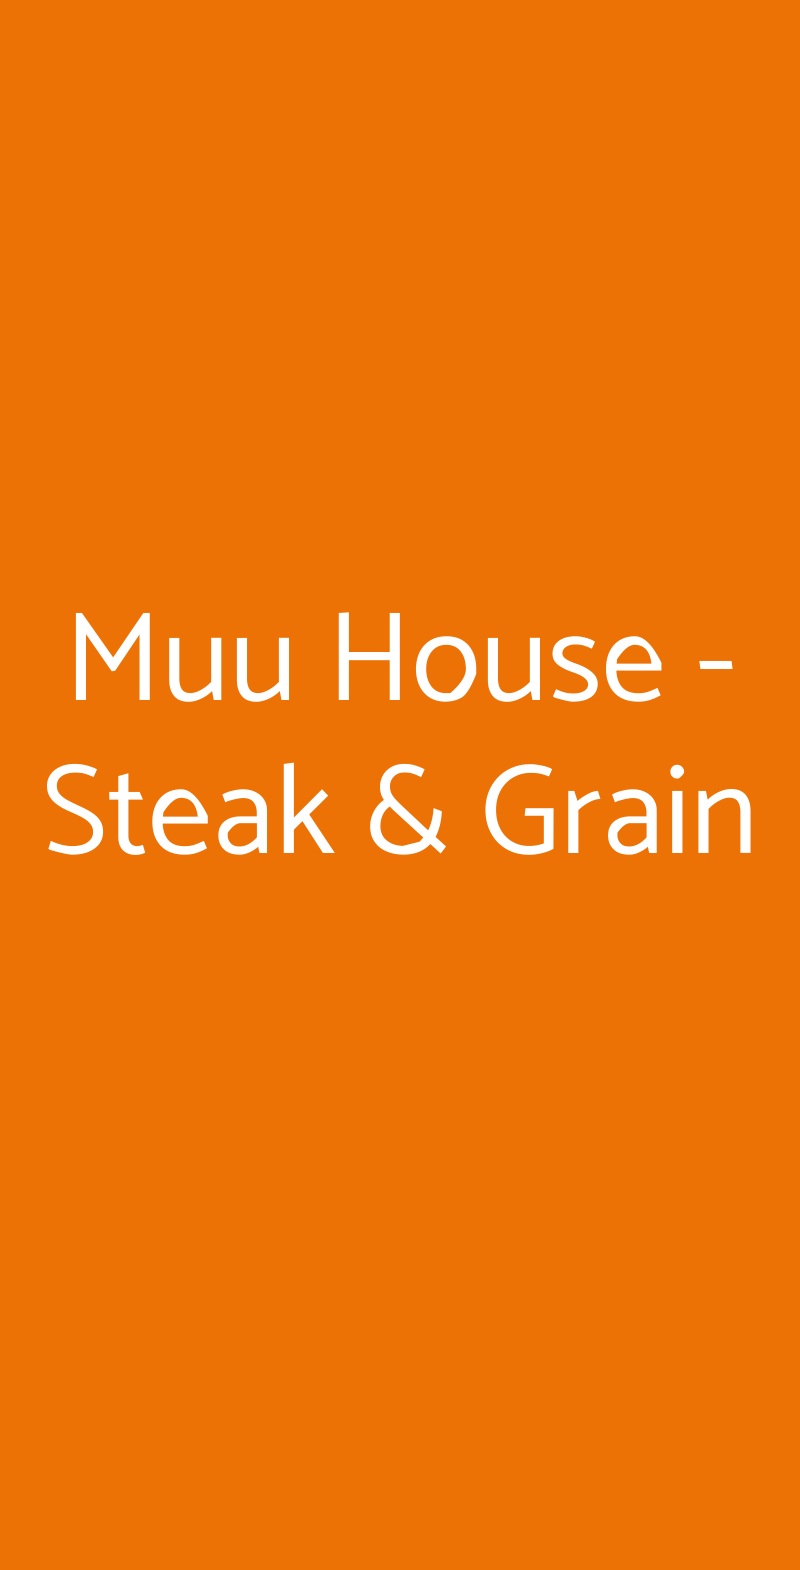 Muu House - Steak & Grain Milano menù 1 pagina